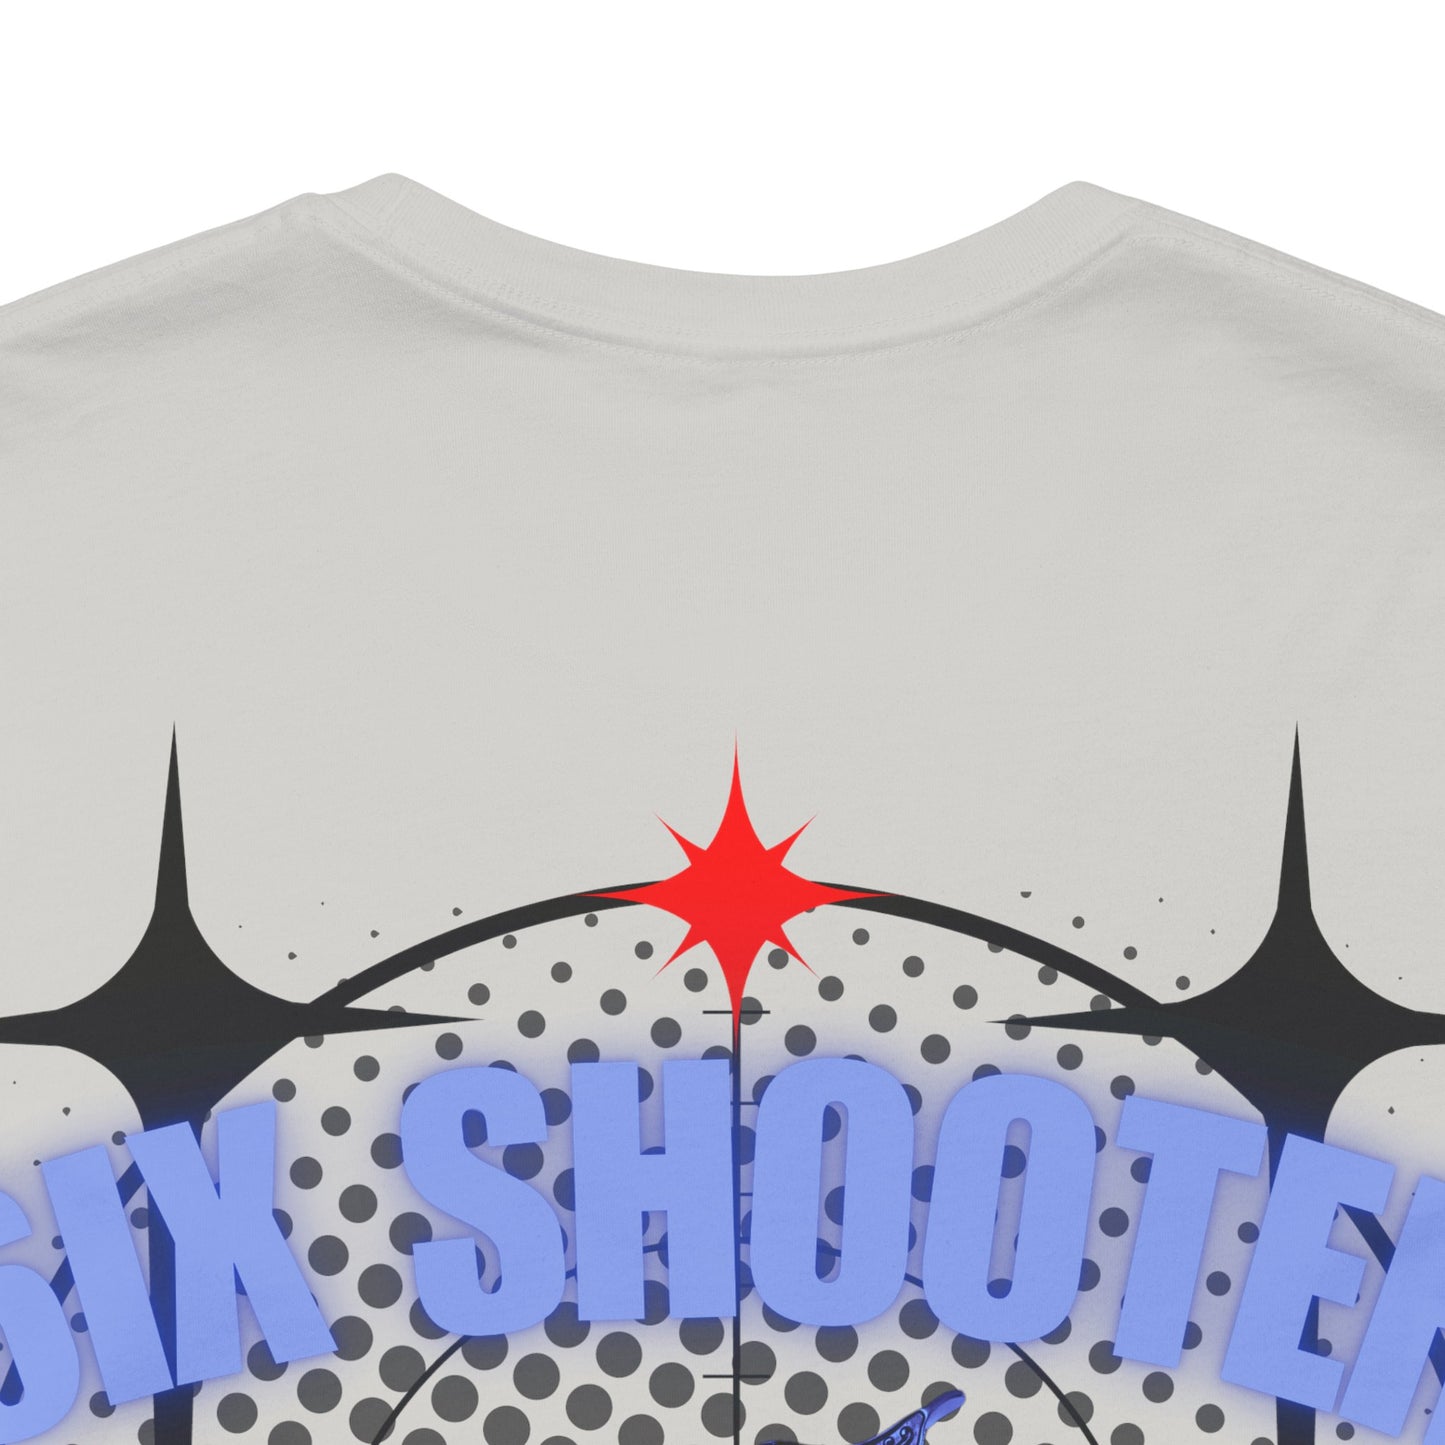 "6IX SHOOTER" Graphic T-Shirt (Design on back)